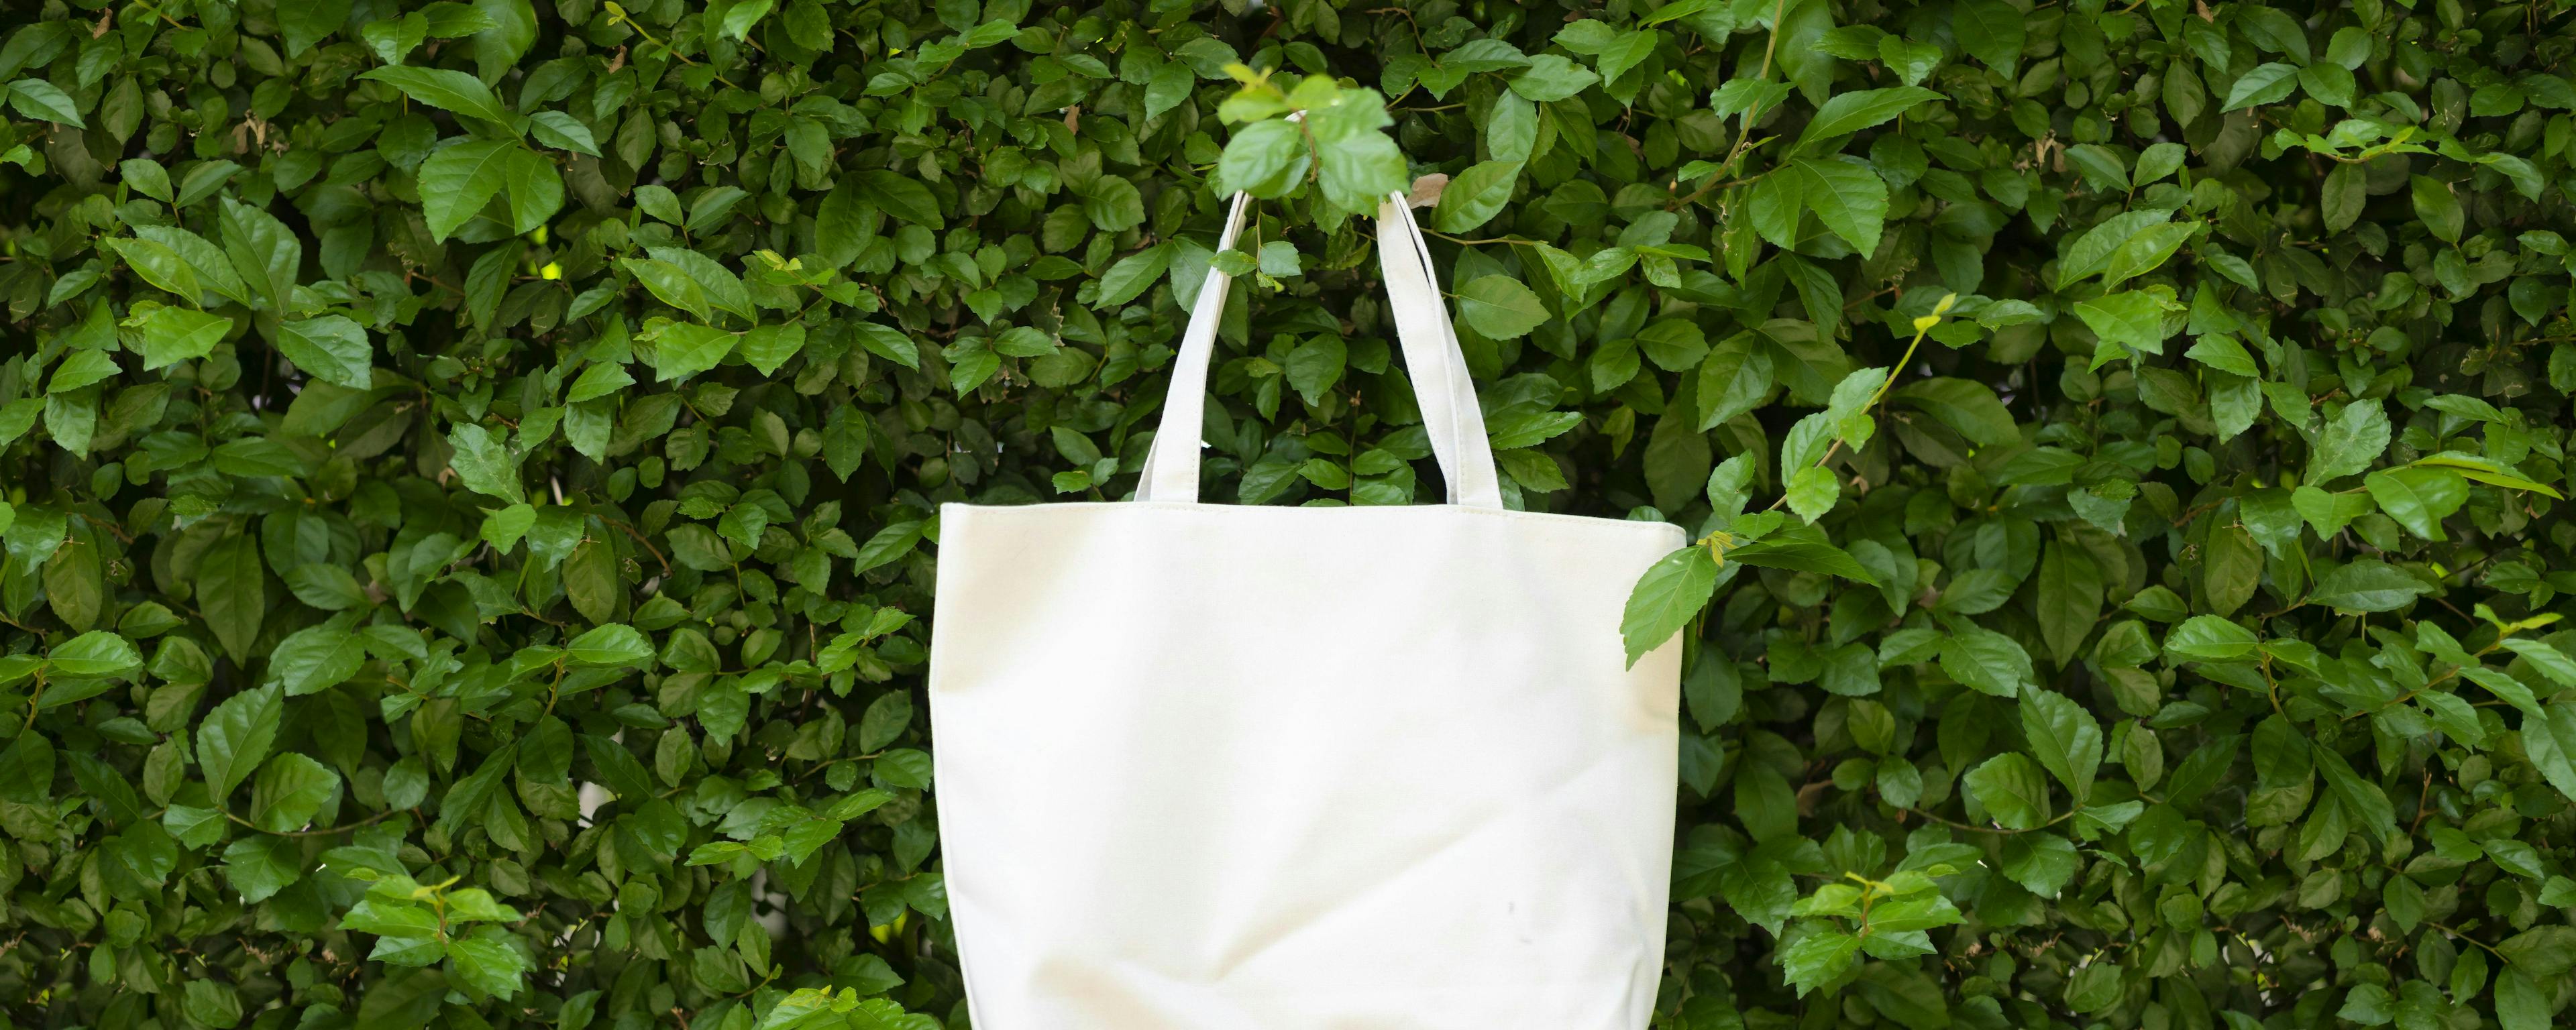 Reusable shopping bag on green leafy backdrop